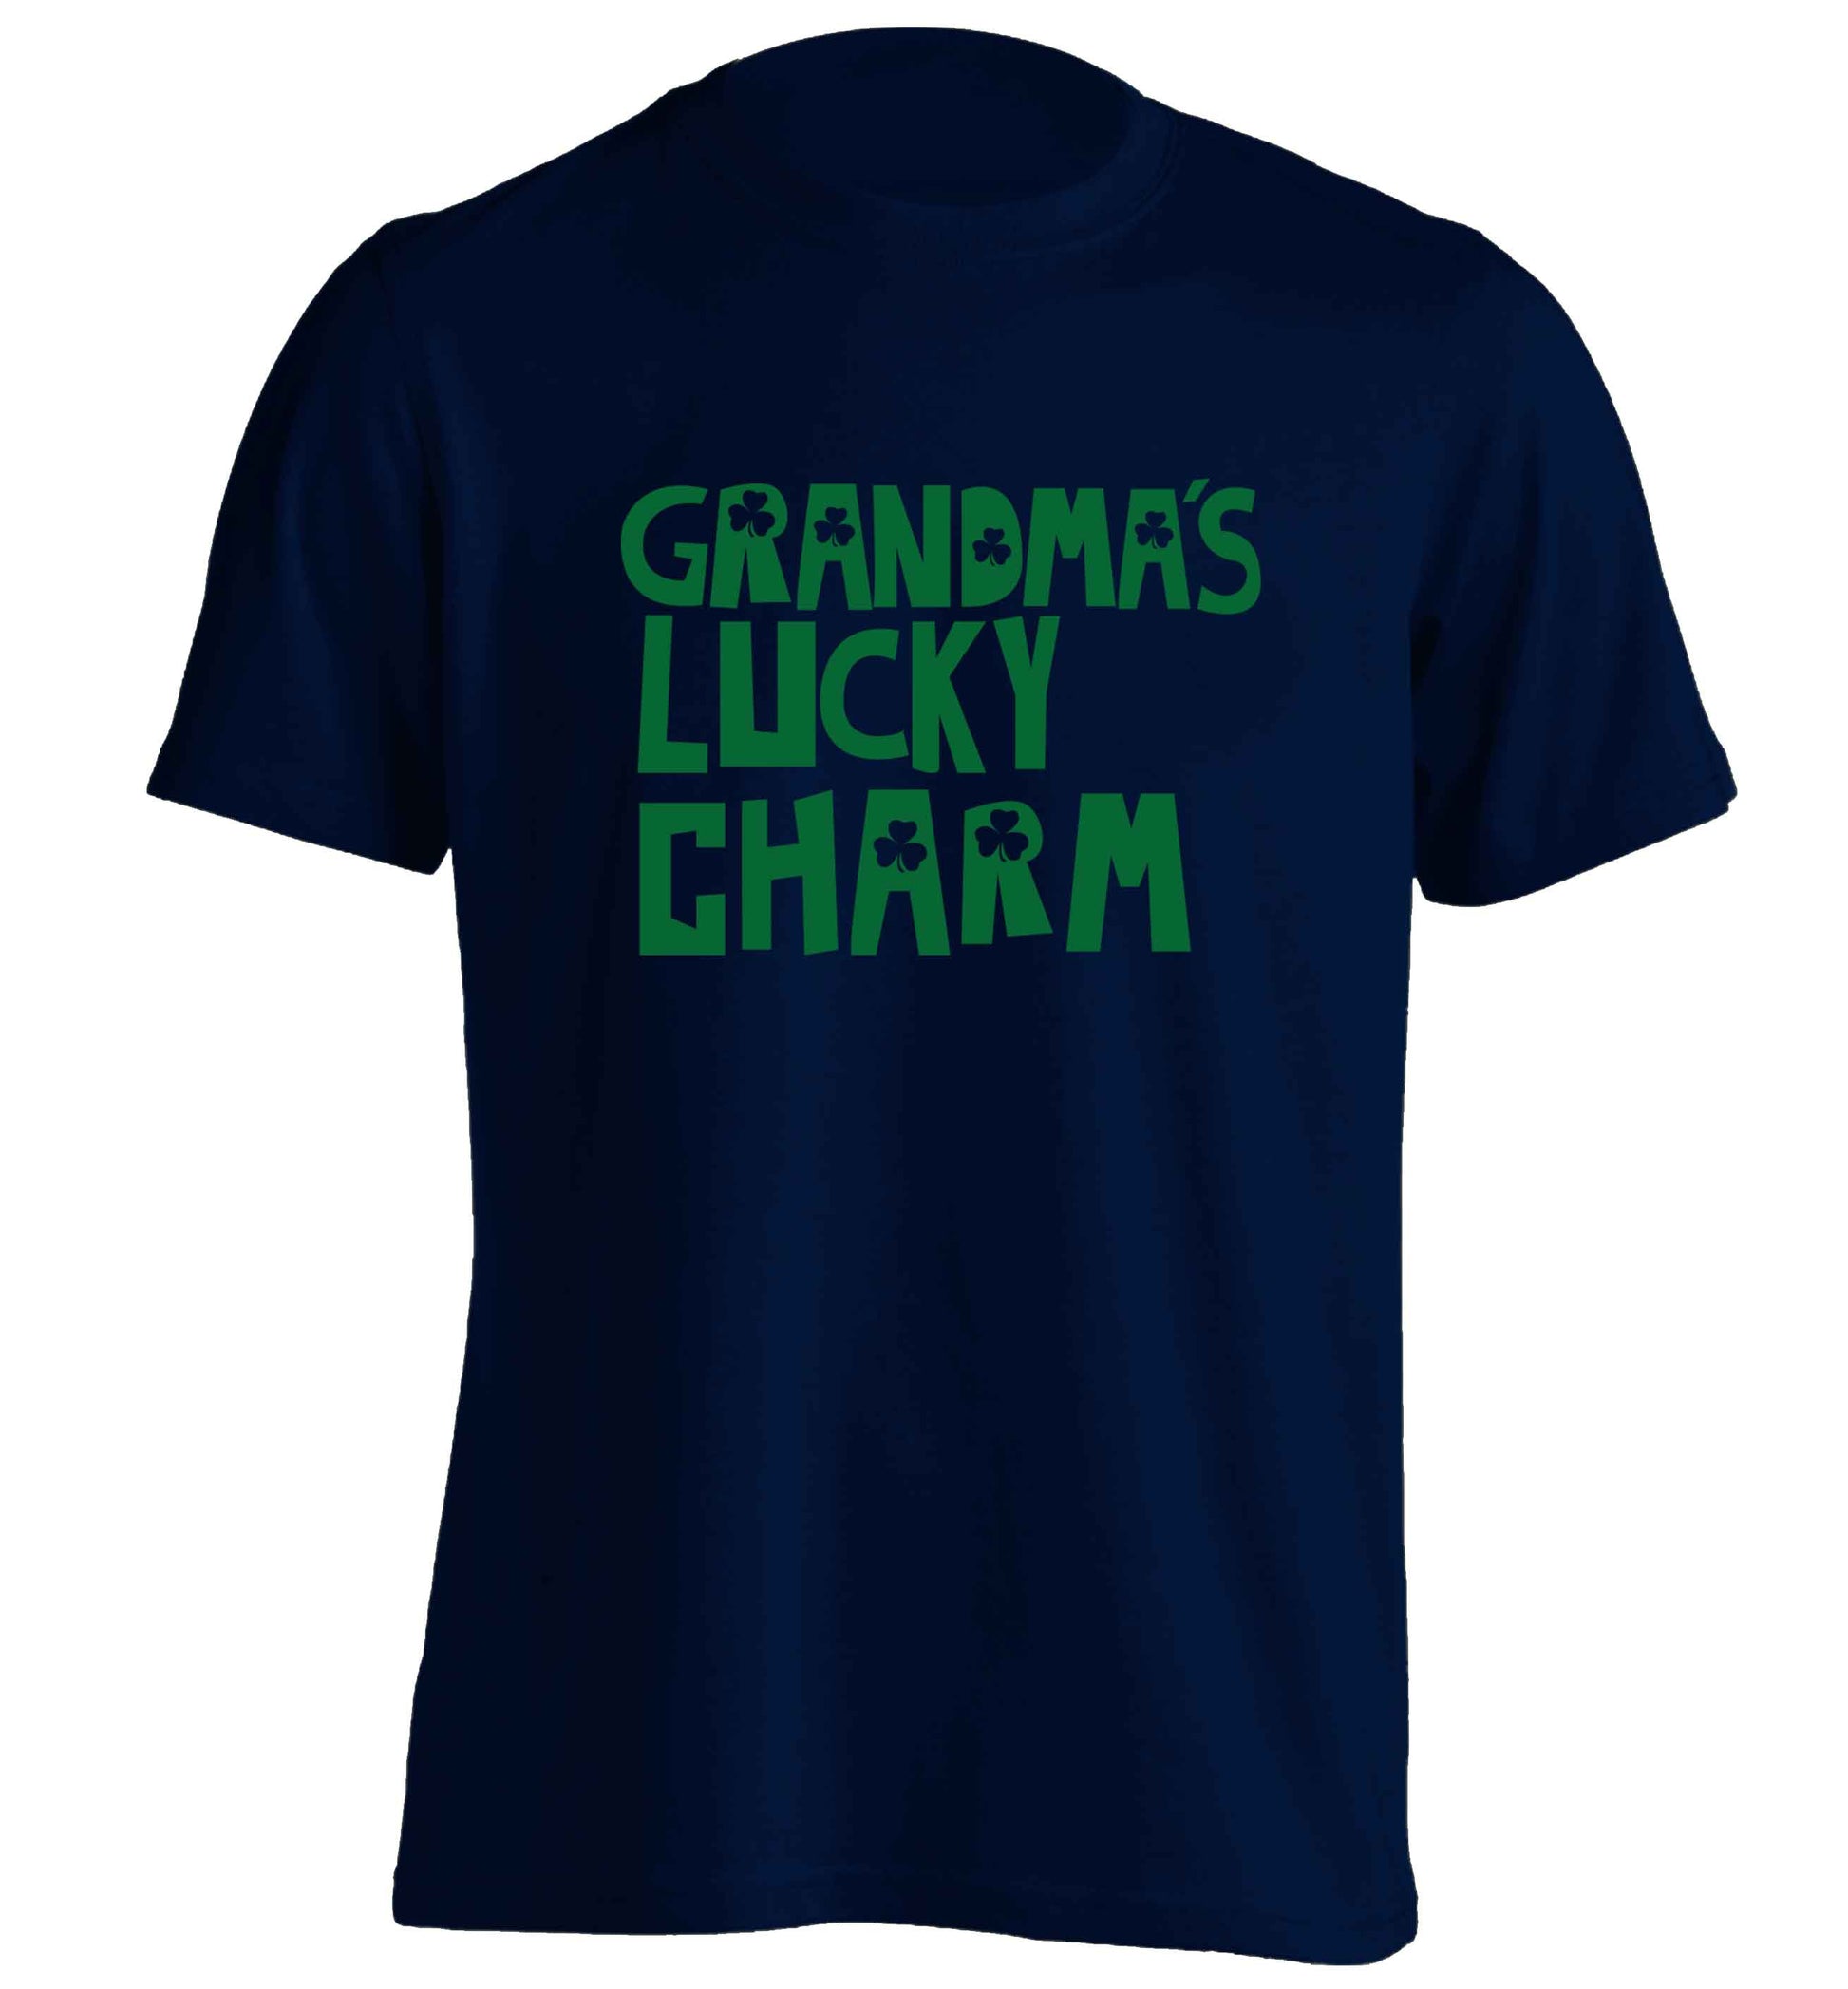 Grandma's lucky charm adults unisex navy Tshirt 2XL